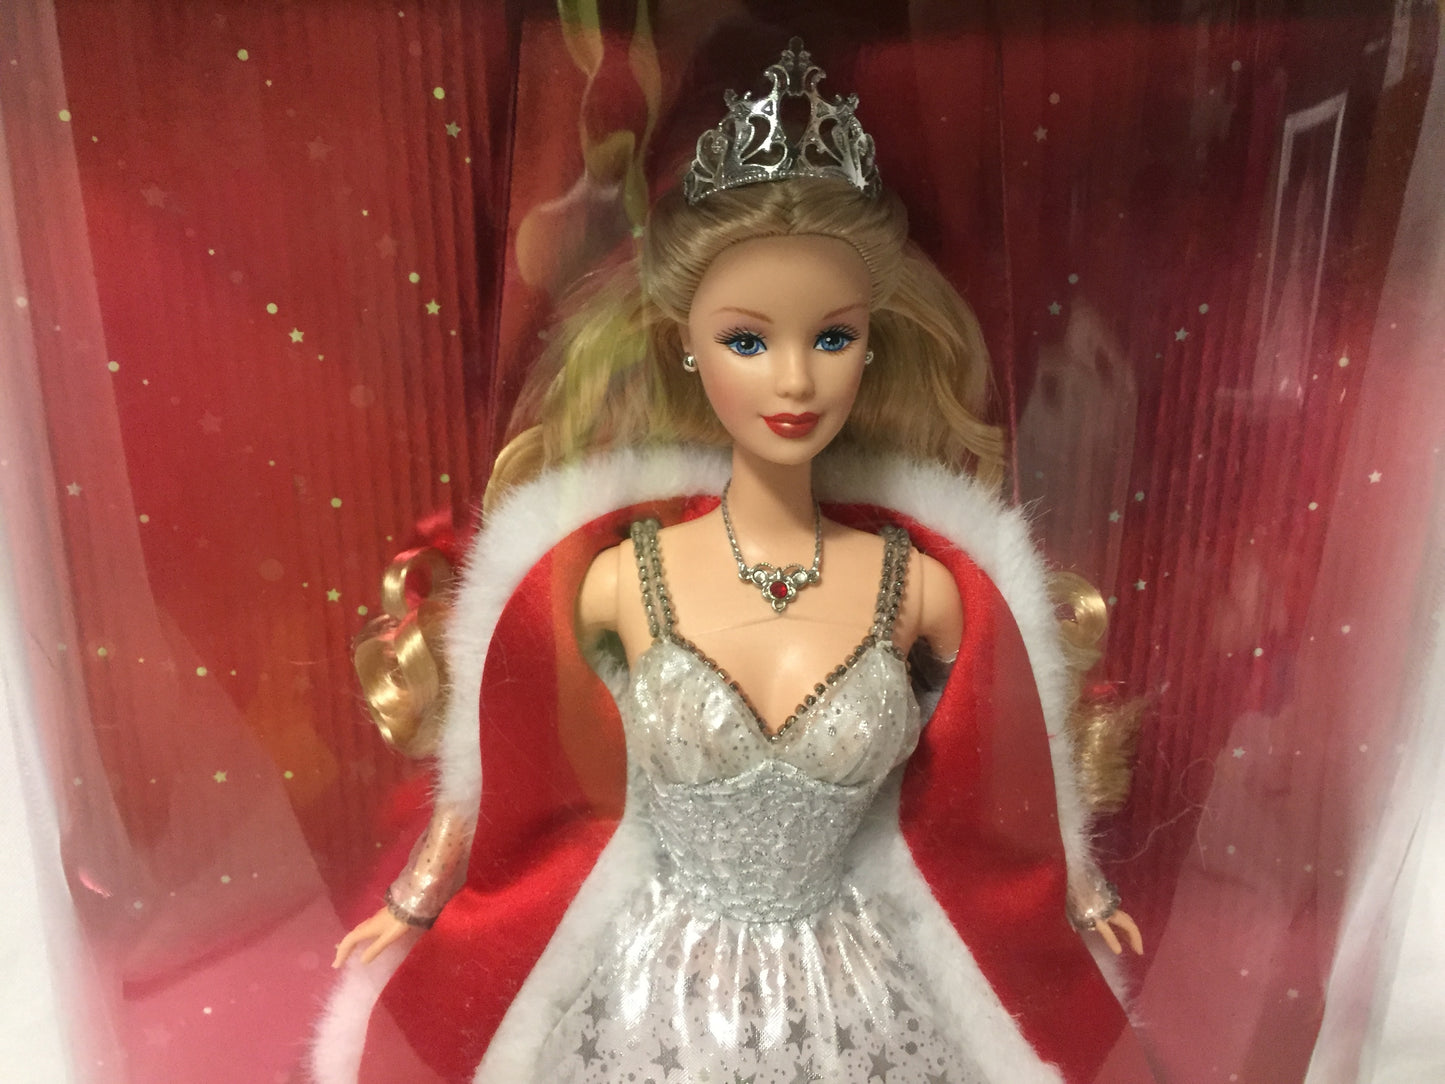 Special Edition 2001 Holiday Celebration Barbie #50304 Hallmark Mattel NRB